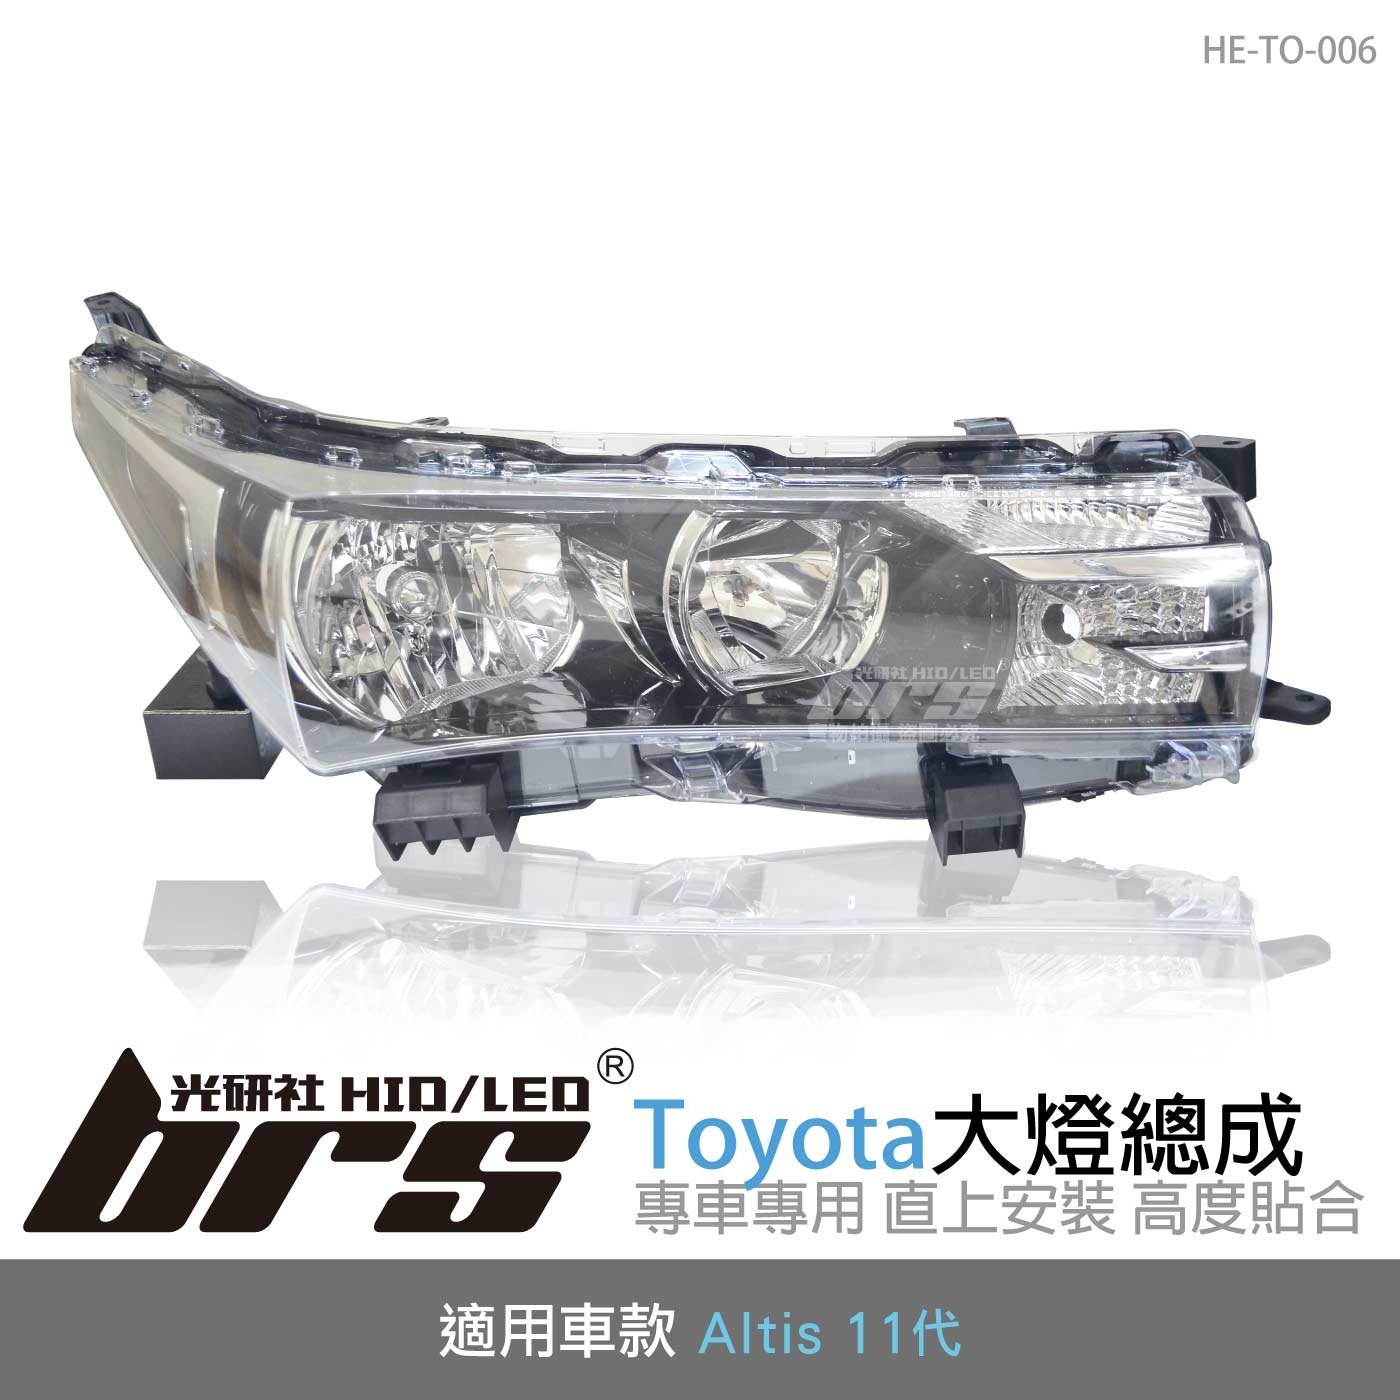 【brs光研社】HE-TO-006 Altis 大燈總成-黑底款 11代 大燈總成 Toyota 豐田 原廠型